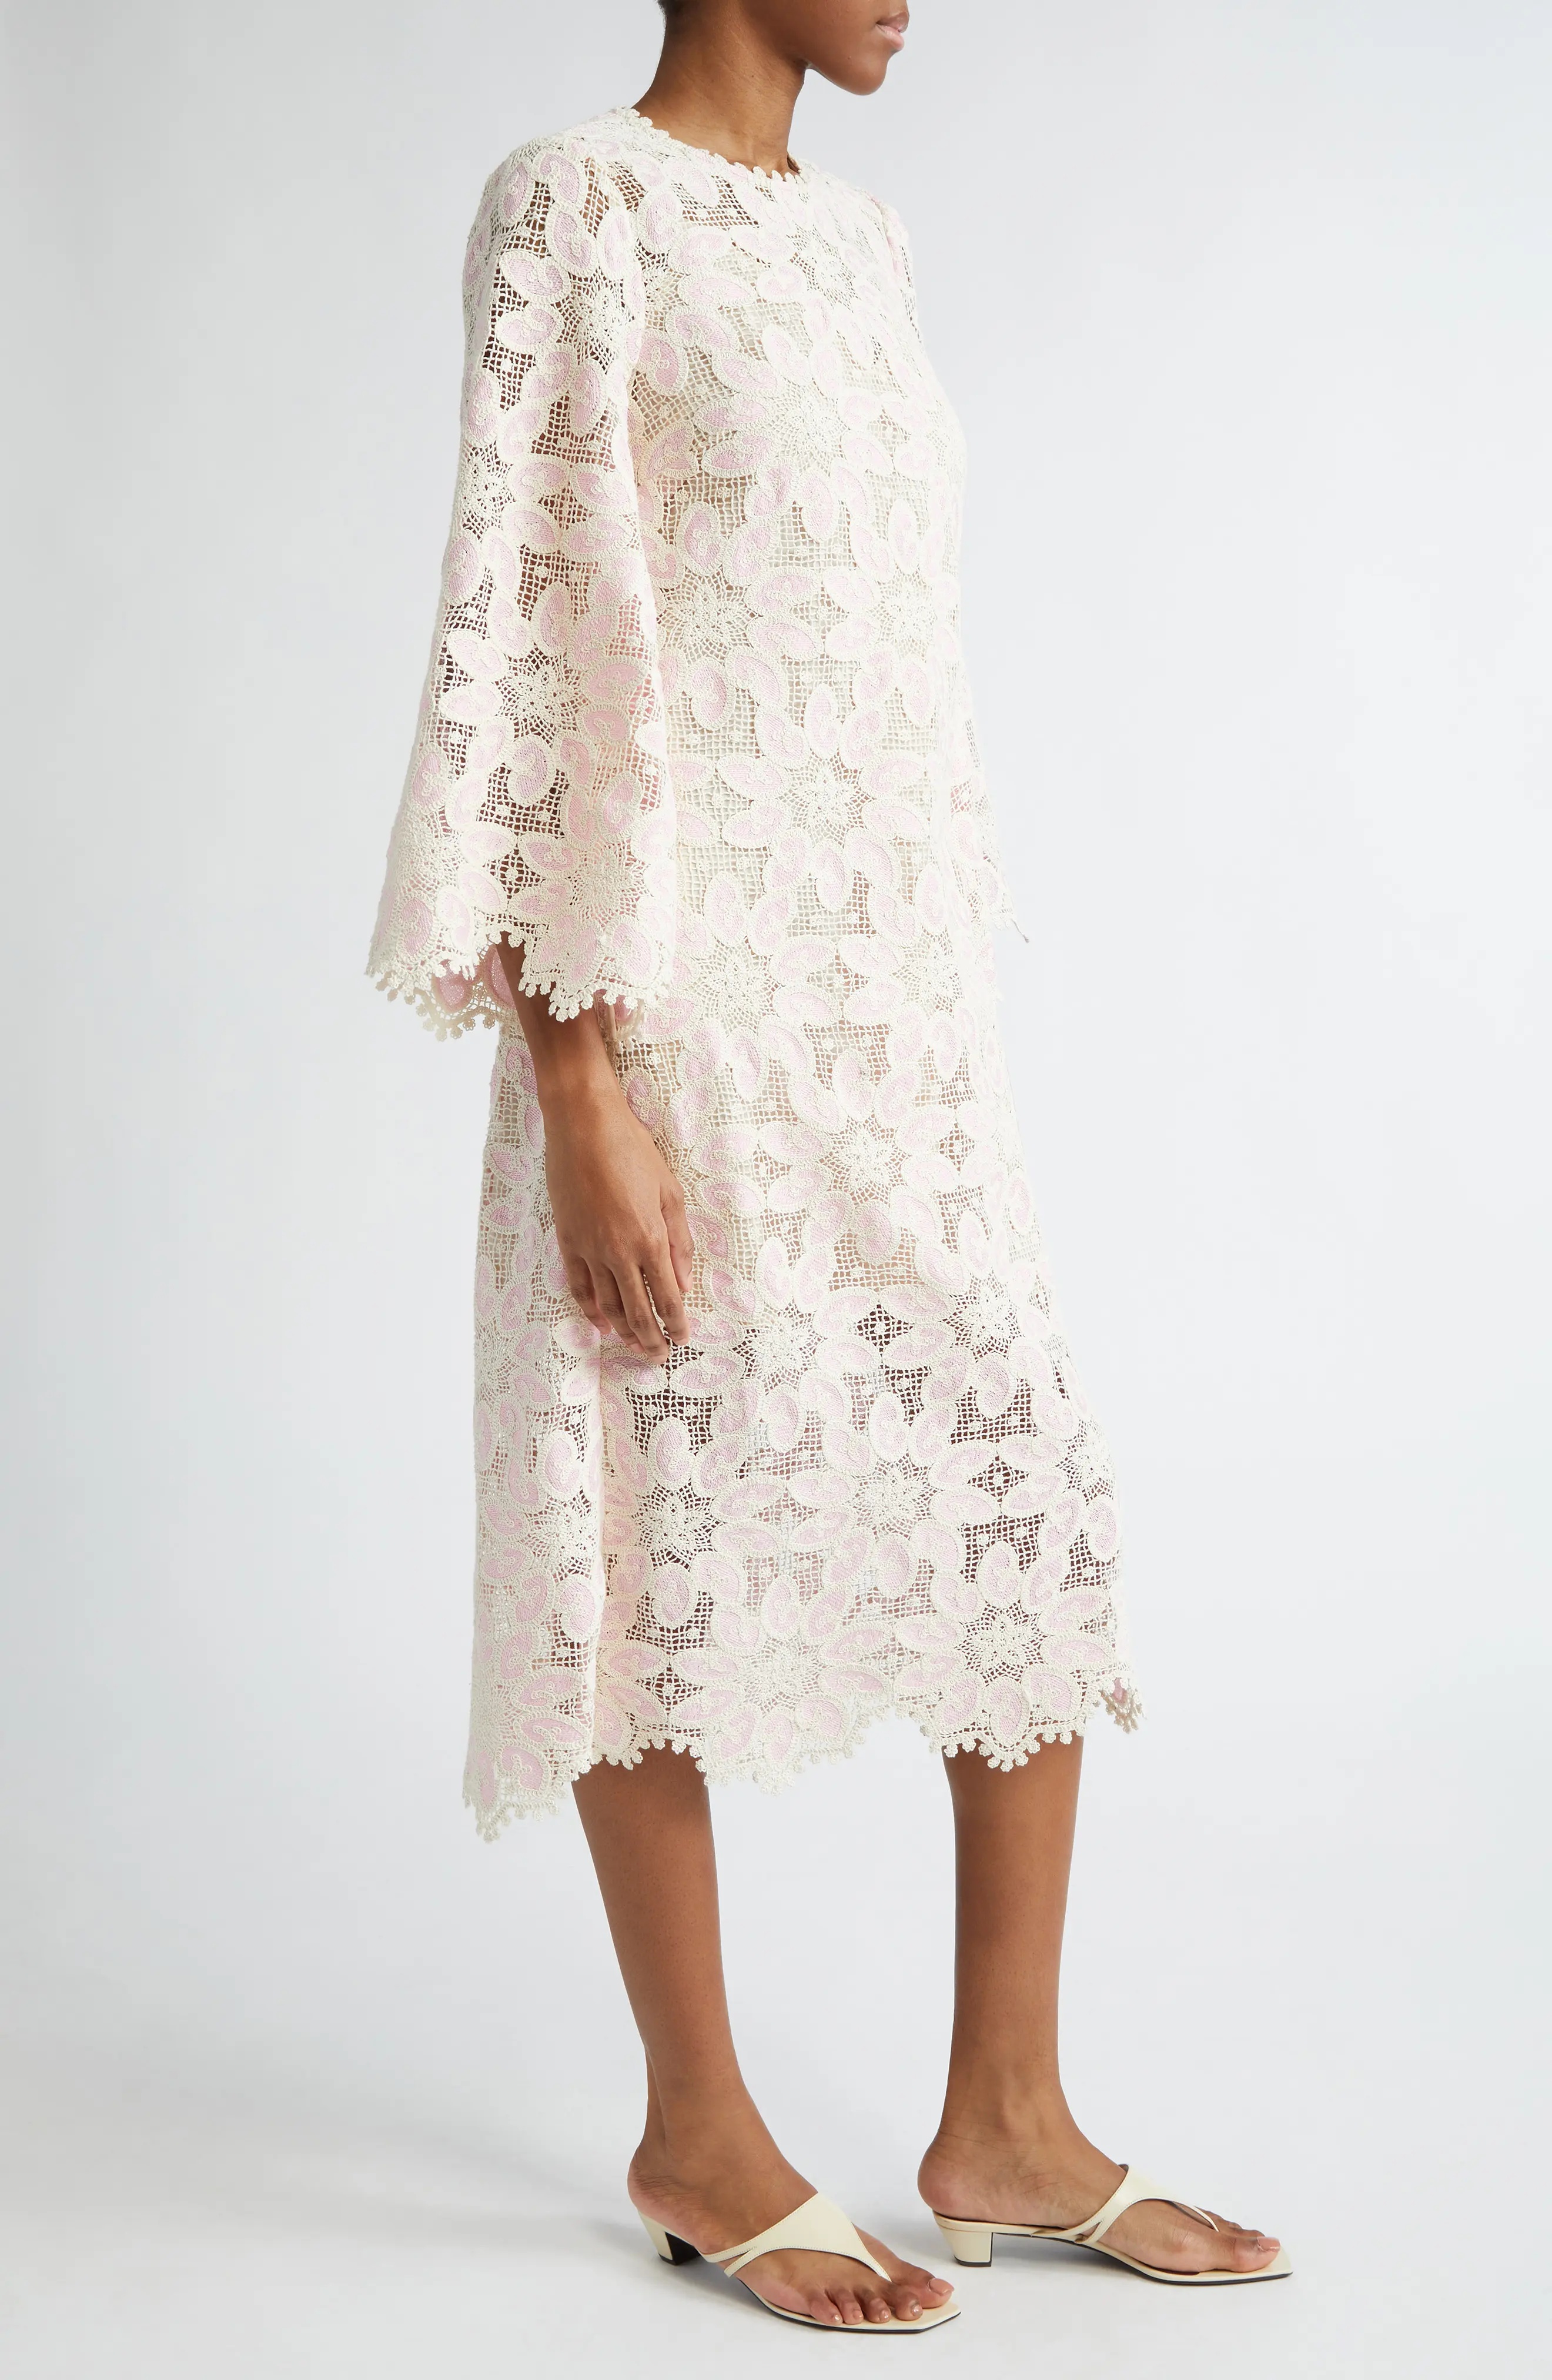 Ottie Long Sleeve Guipure Lace Cotton Blend Midi Dress in Cream/Pink - 3